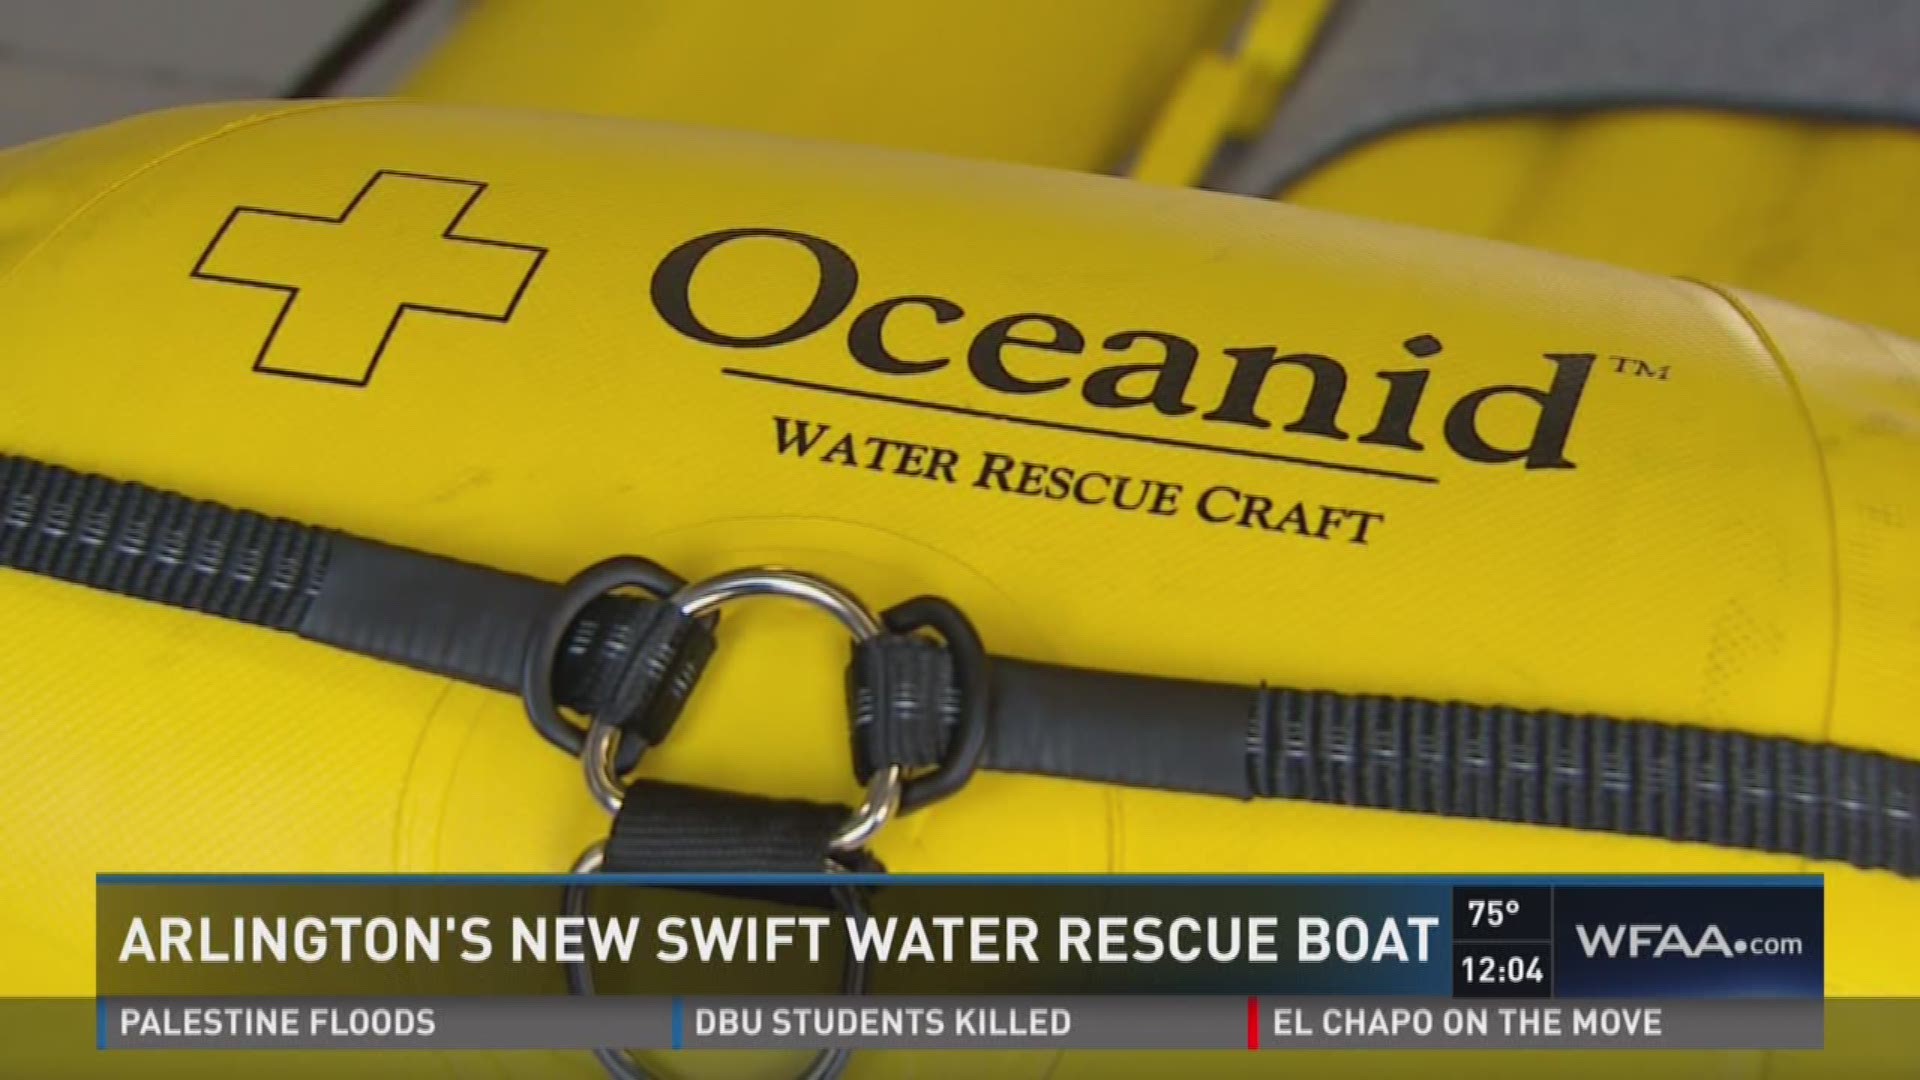 Arlington's new swift water rescue boat